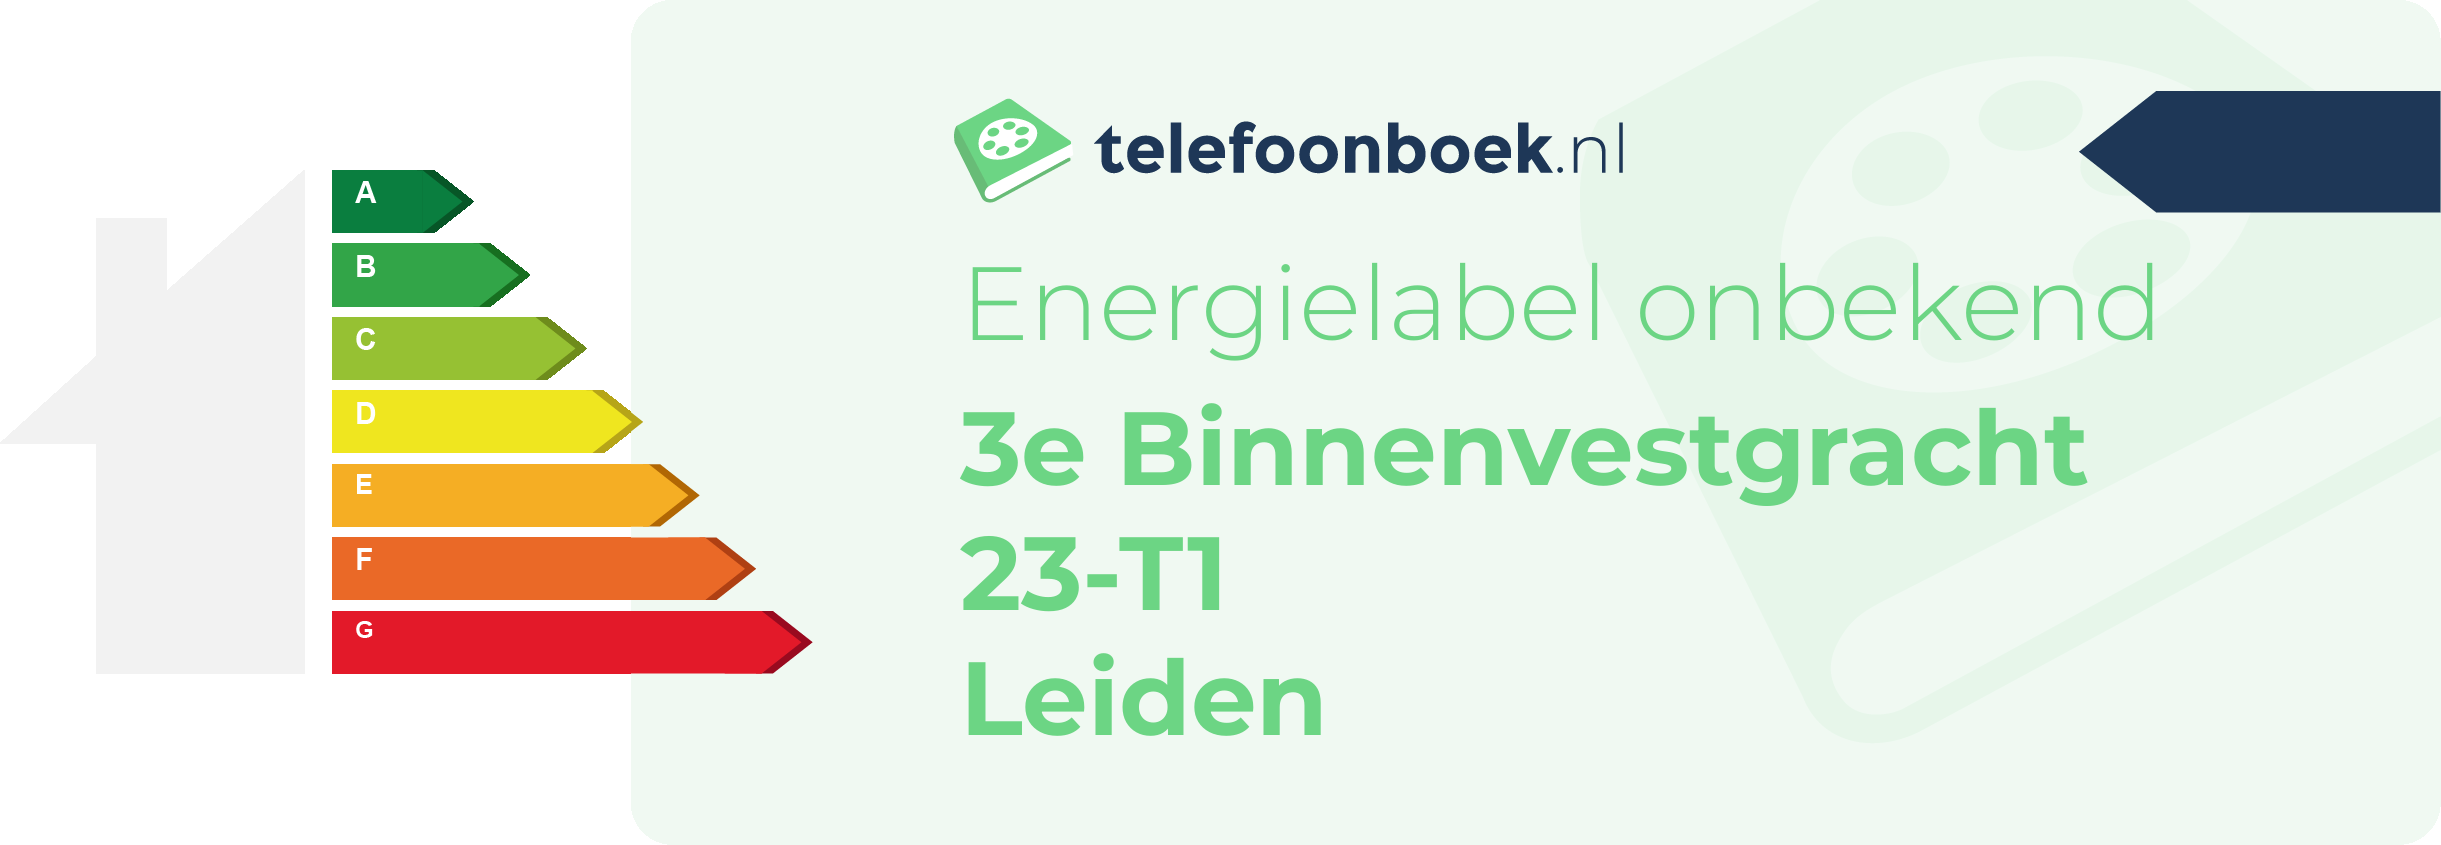 Energielabel 3e Binnenvestgracht 23-T1 Leiden